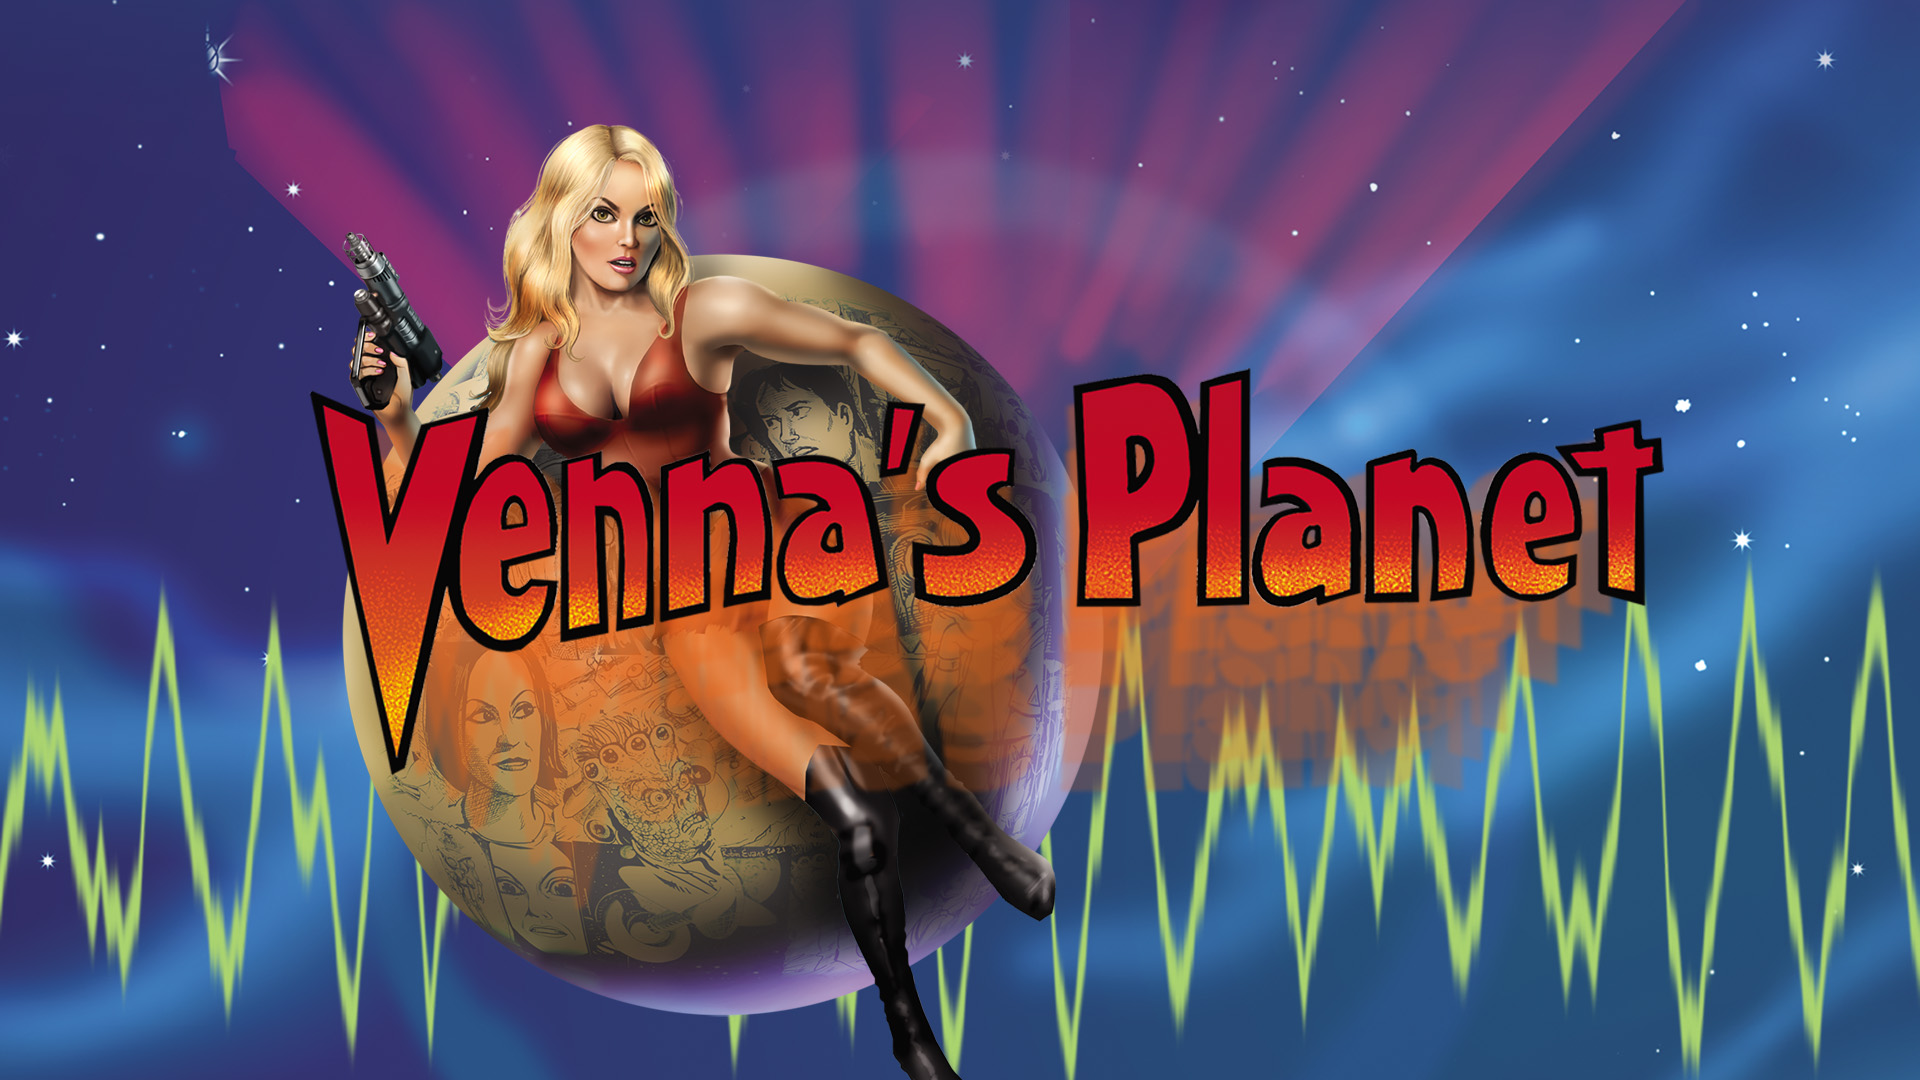 Venna's Planet